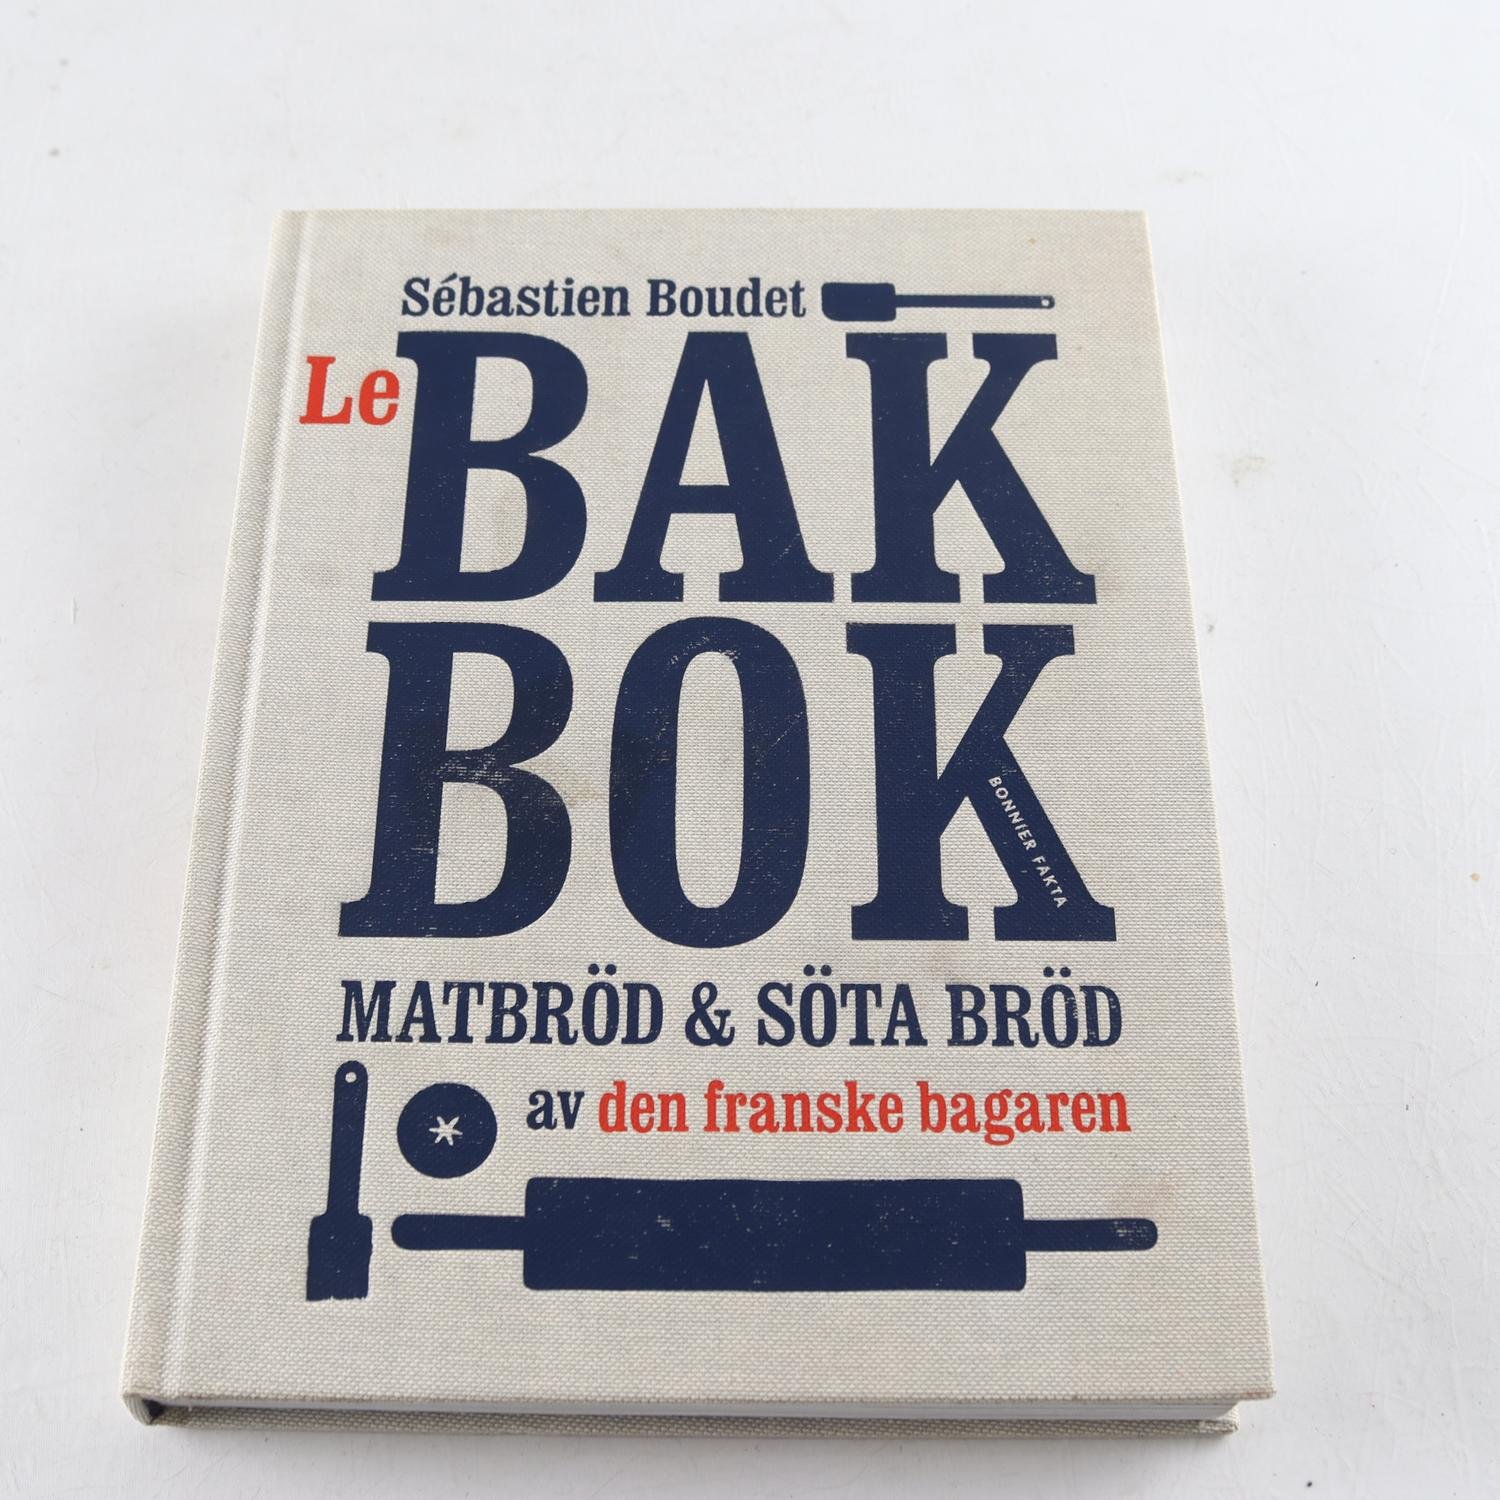 Sébastian Boudet, Le Bakbok